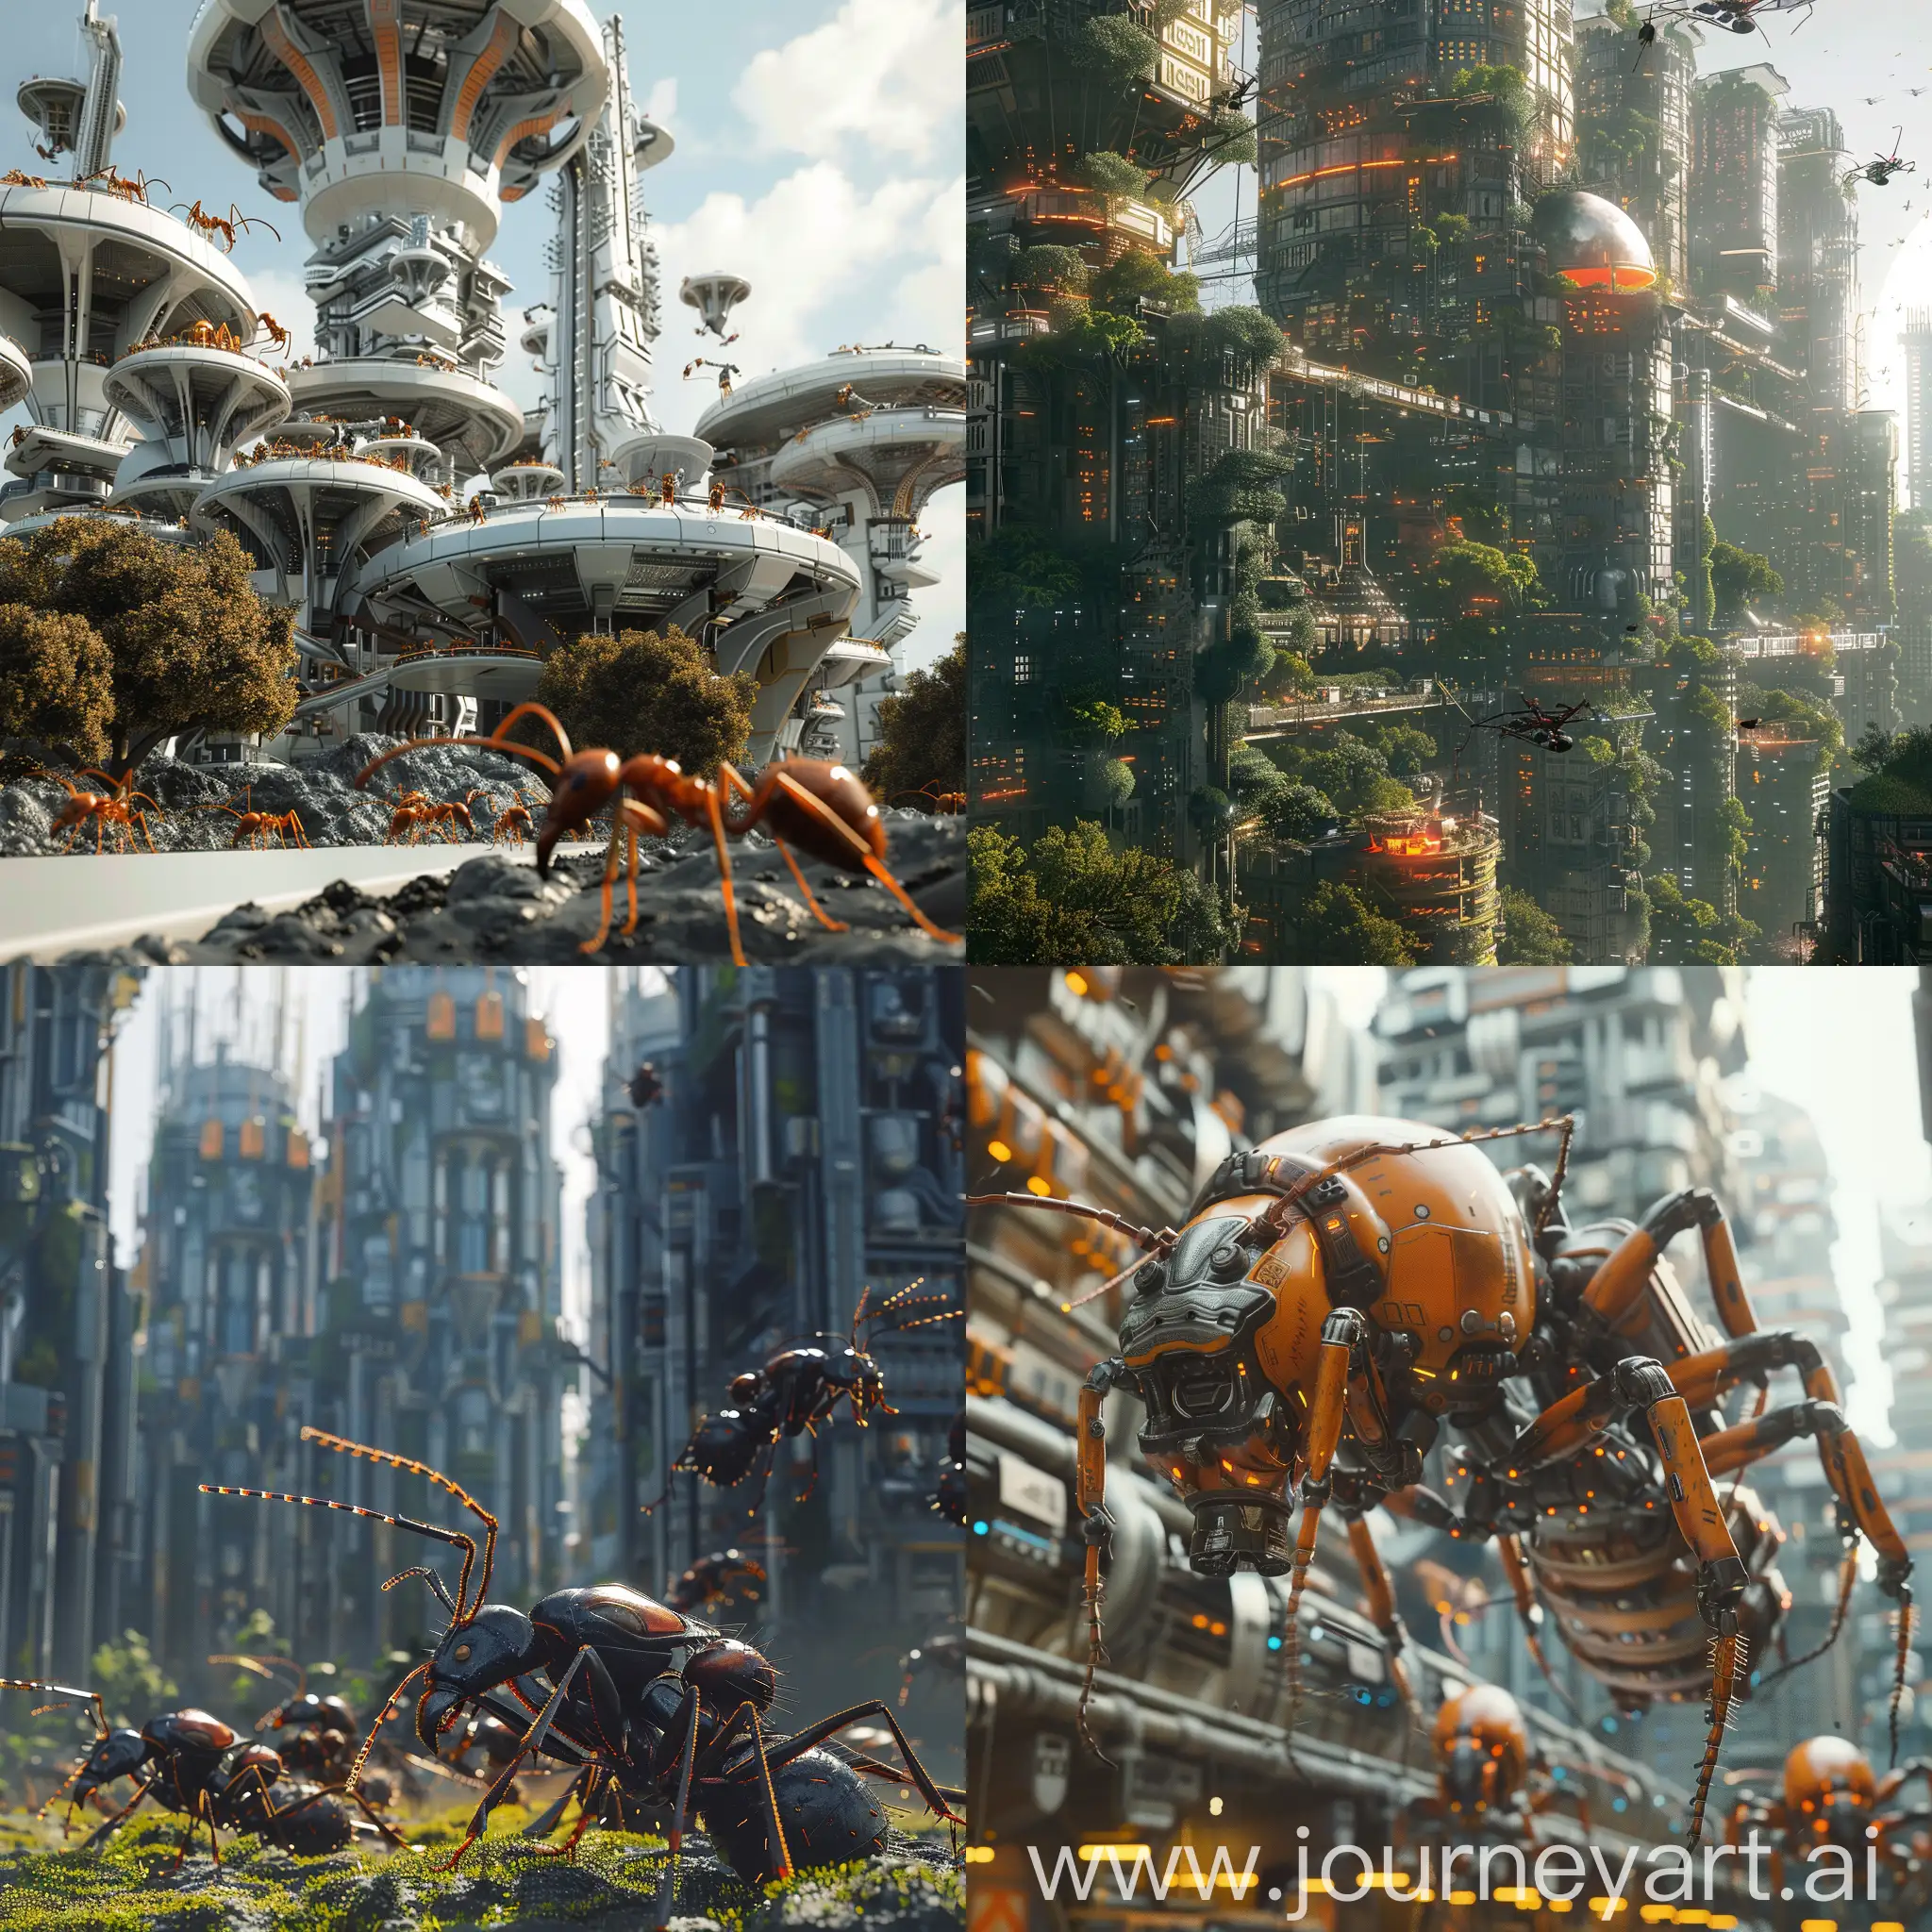 Futuristic-Cyberpunk-Ants-Explore-Metaverse-Urban-Architecture